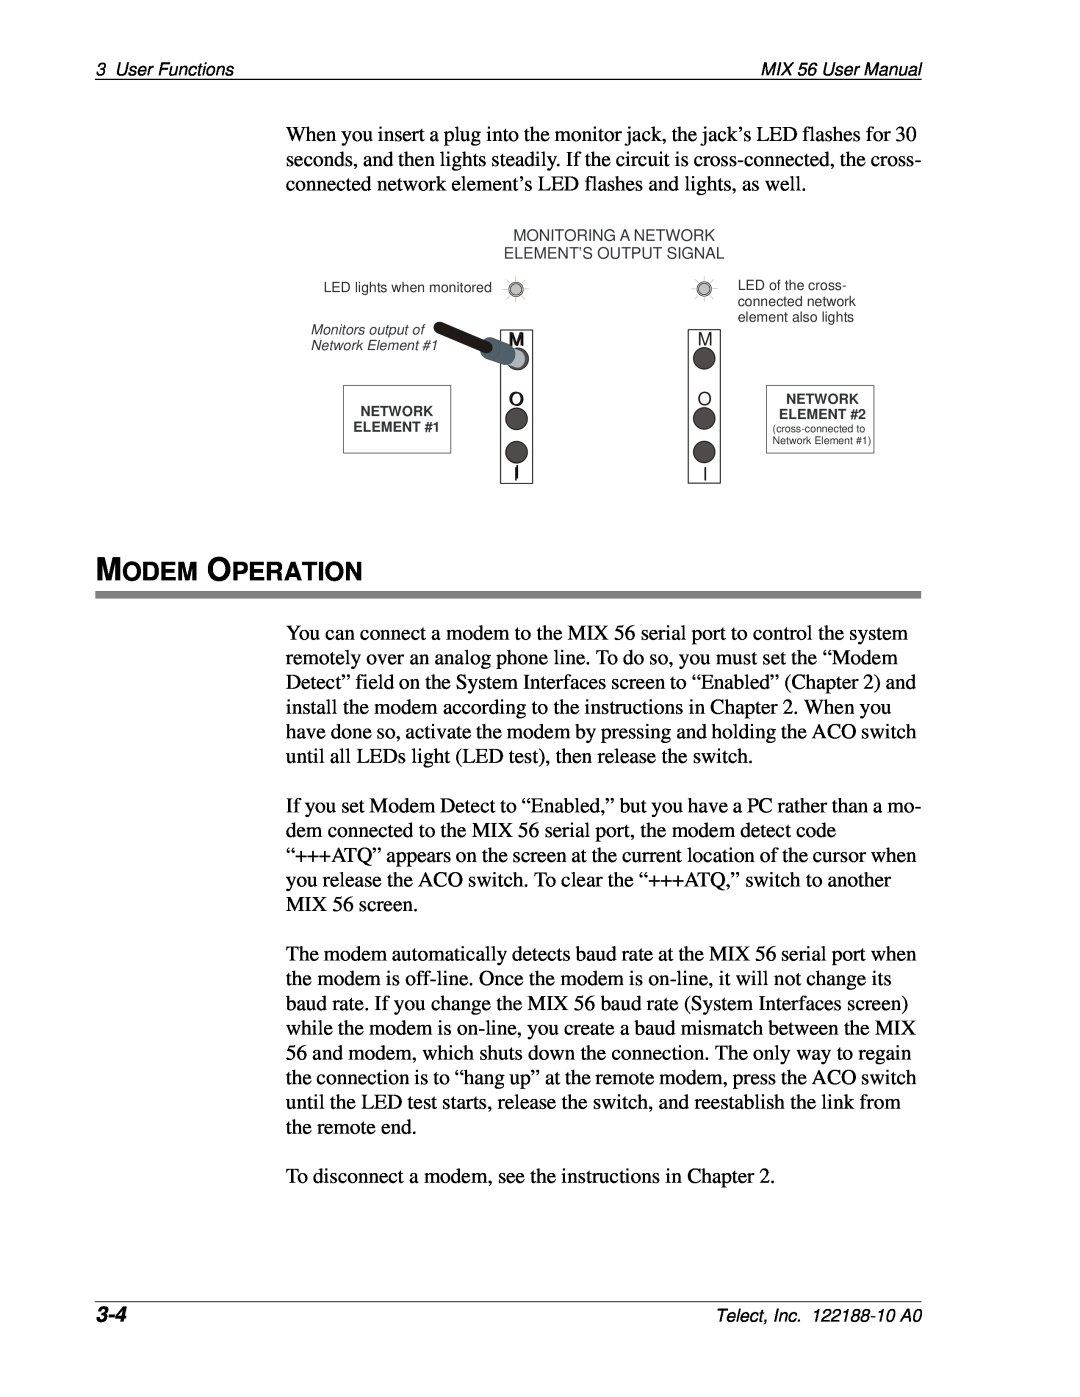 Telect MIX 56 user manual Modem Operation 